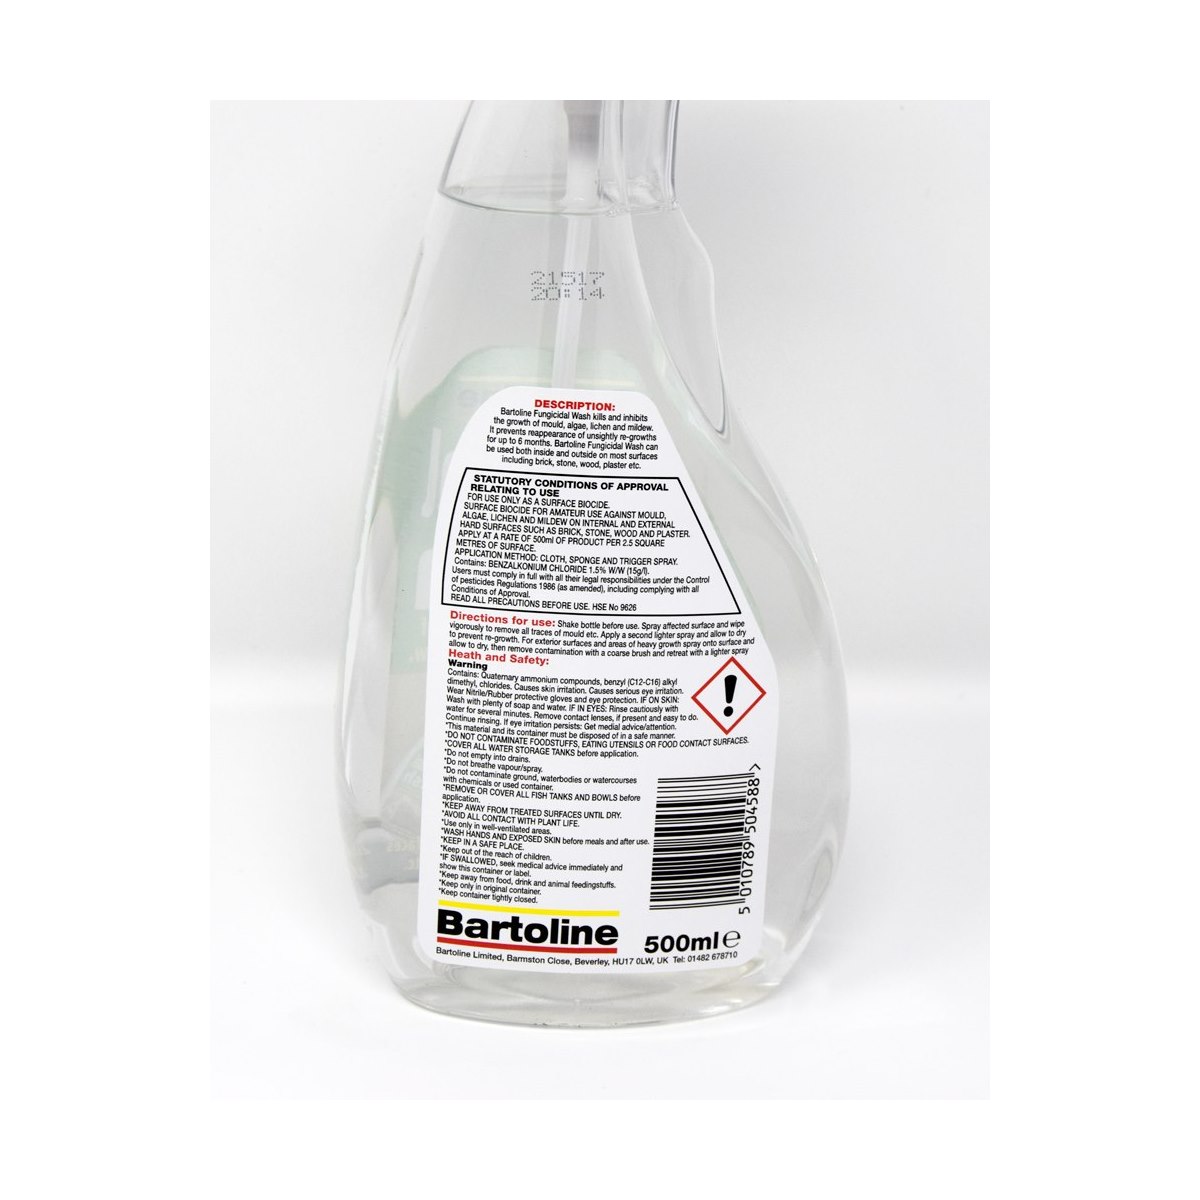 Bartoline Fungicidal Spray